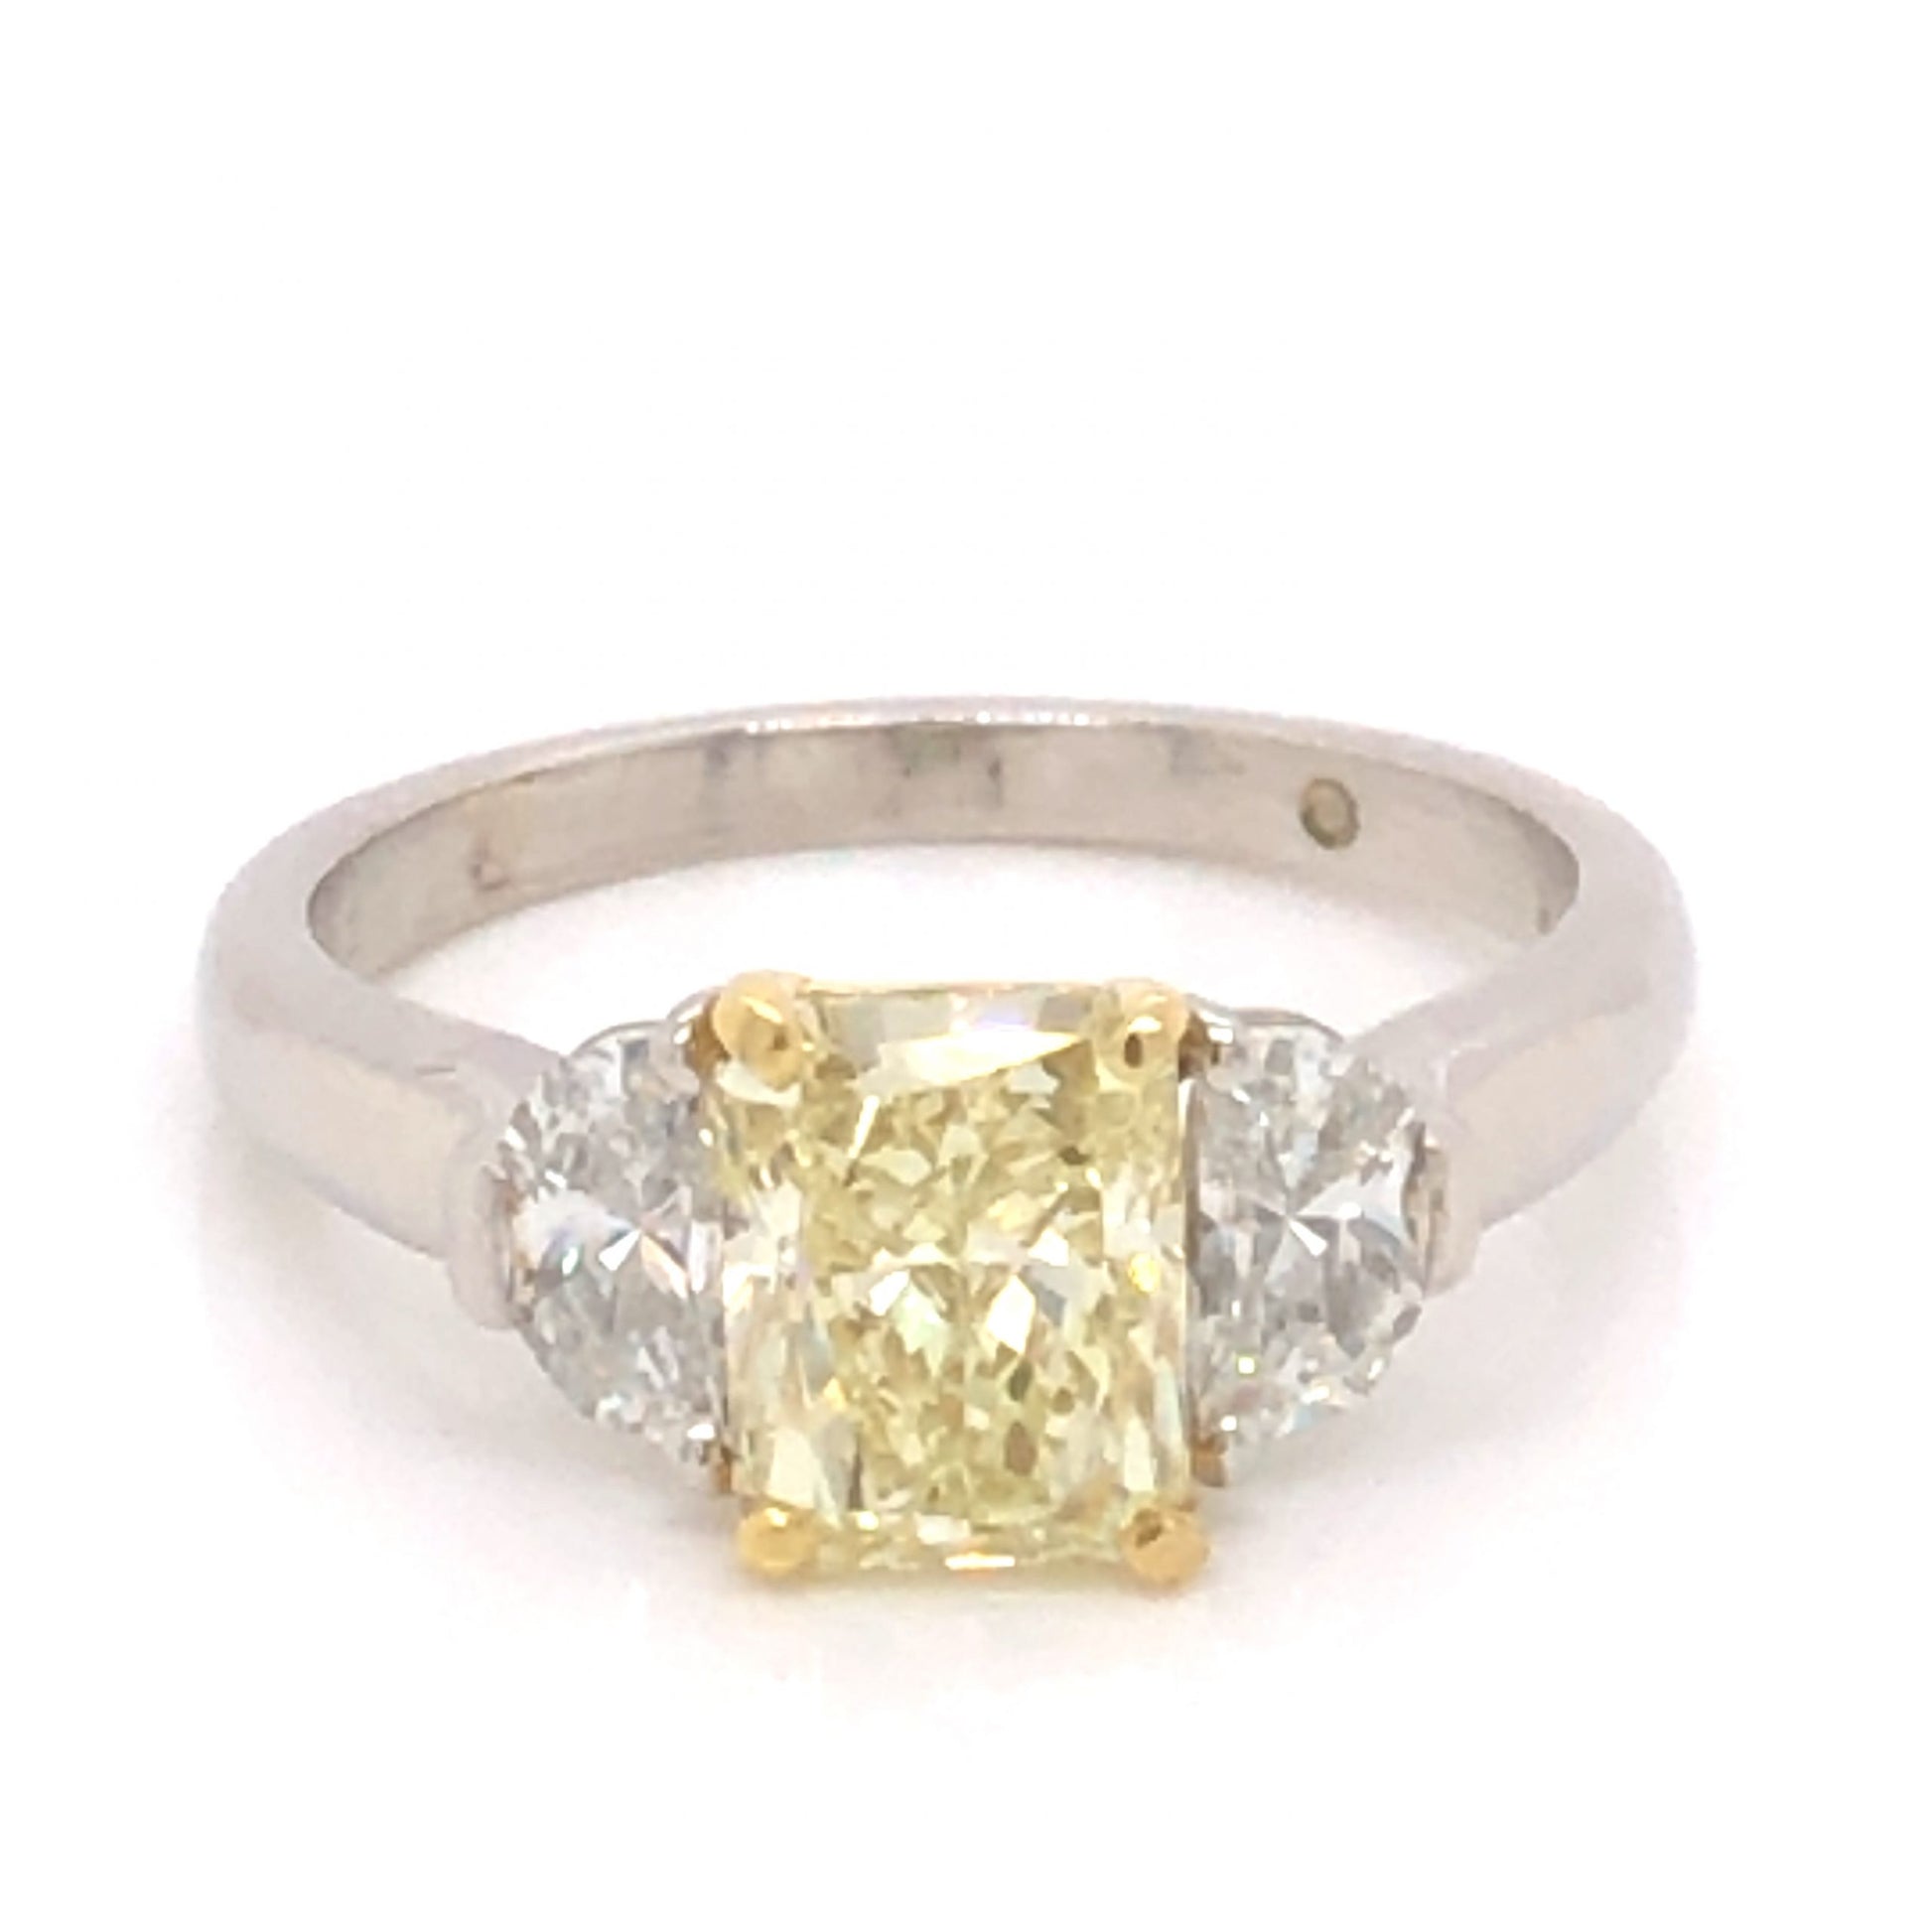 1.80 Yellow Diamond Engagement Ring in Platinum & 18k Yellow GoldComposition: Platinum/18 Karat Yellow Gold Ring Size: 6.5 Total Diamond Weight: 2.90ct Total Gram Weight: 5.7 g Inscription: 10% IRD PLAT, 18K
      